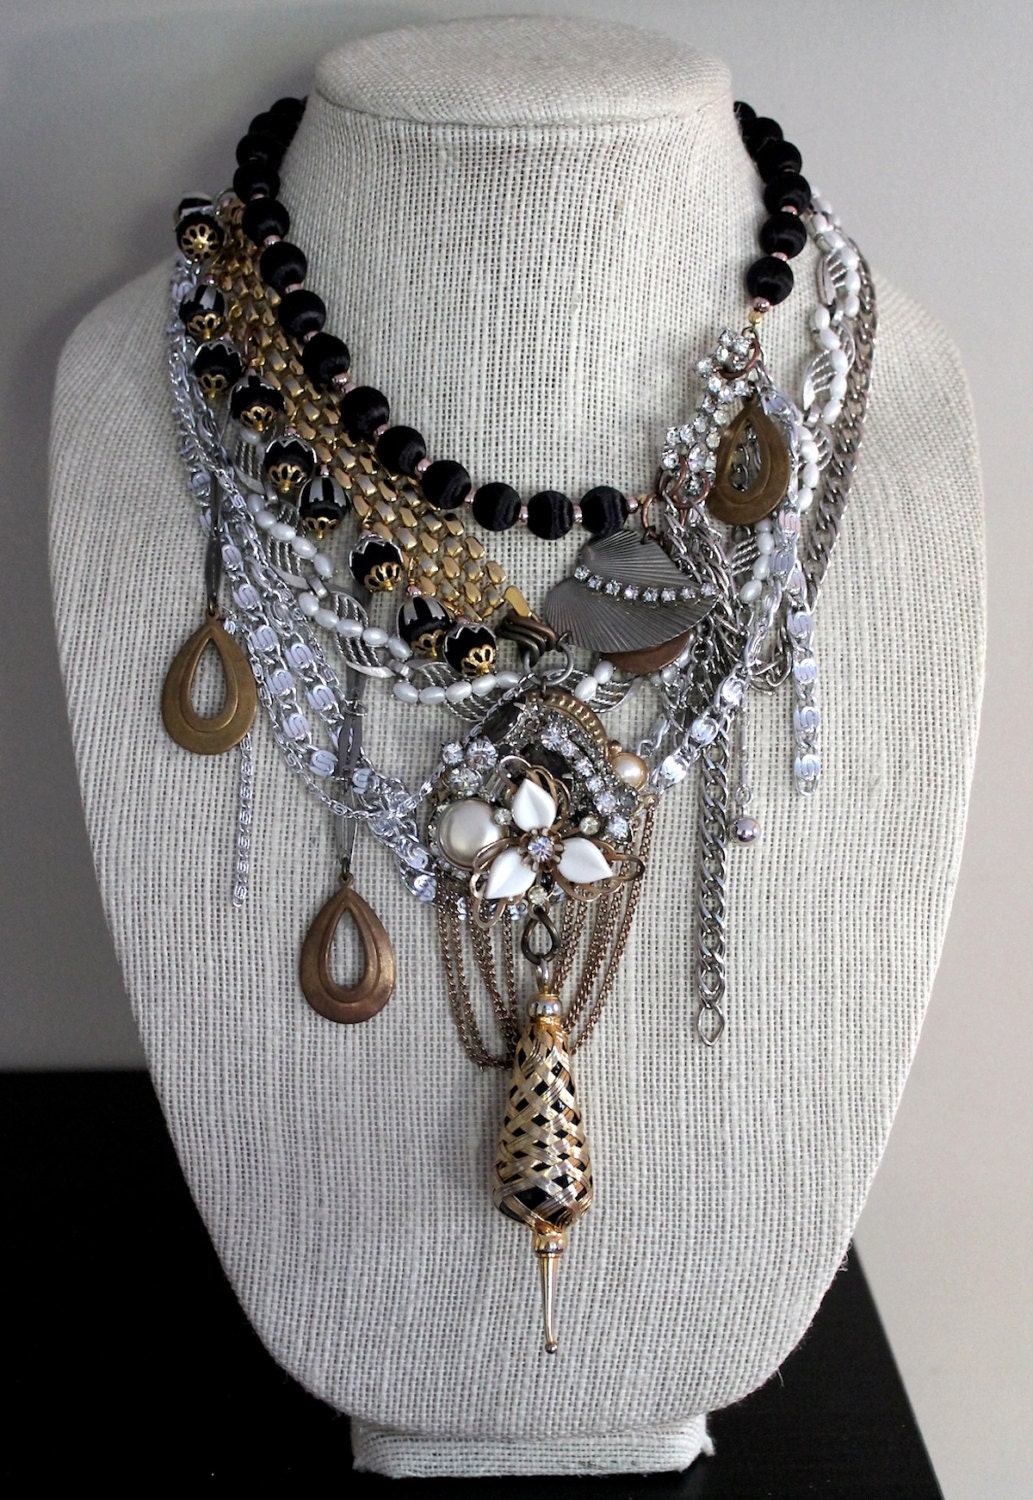 Lorikeet. Repurposed Antique Vintage Black Jewelry Pearls Silver Gold Brass Chains Swarovski Crystal Rhinestones OOAK Statement Necklace.